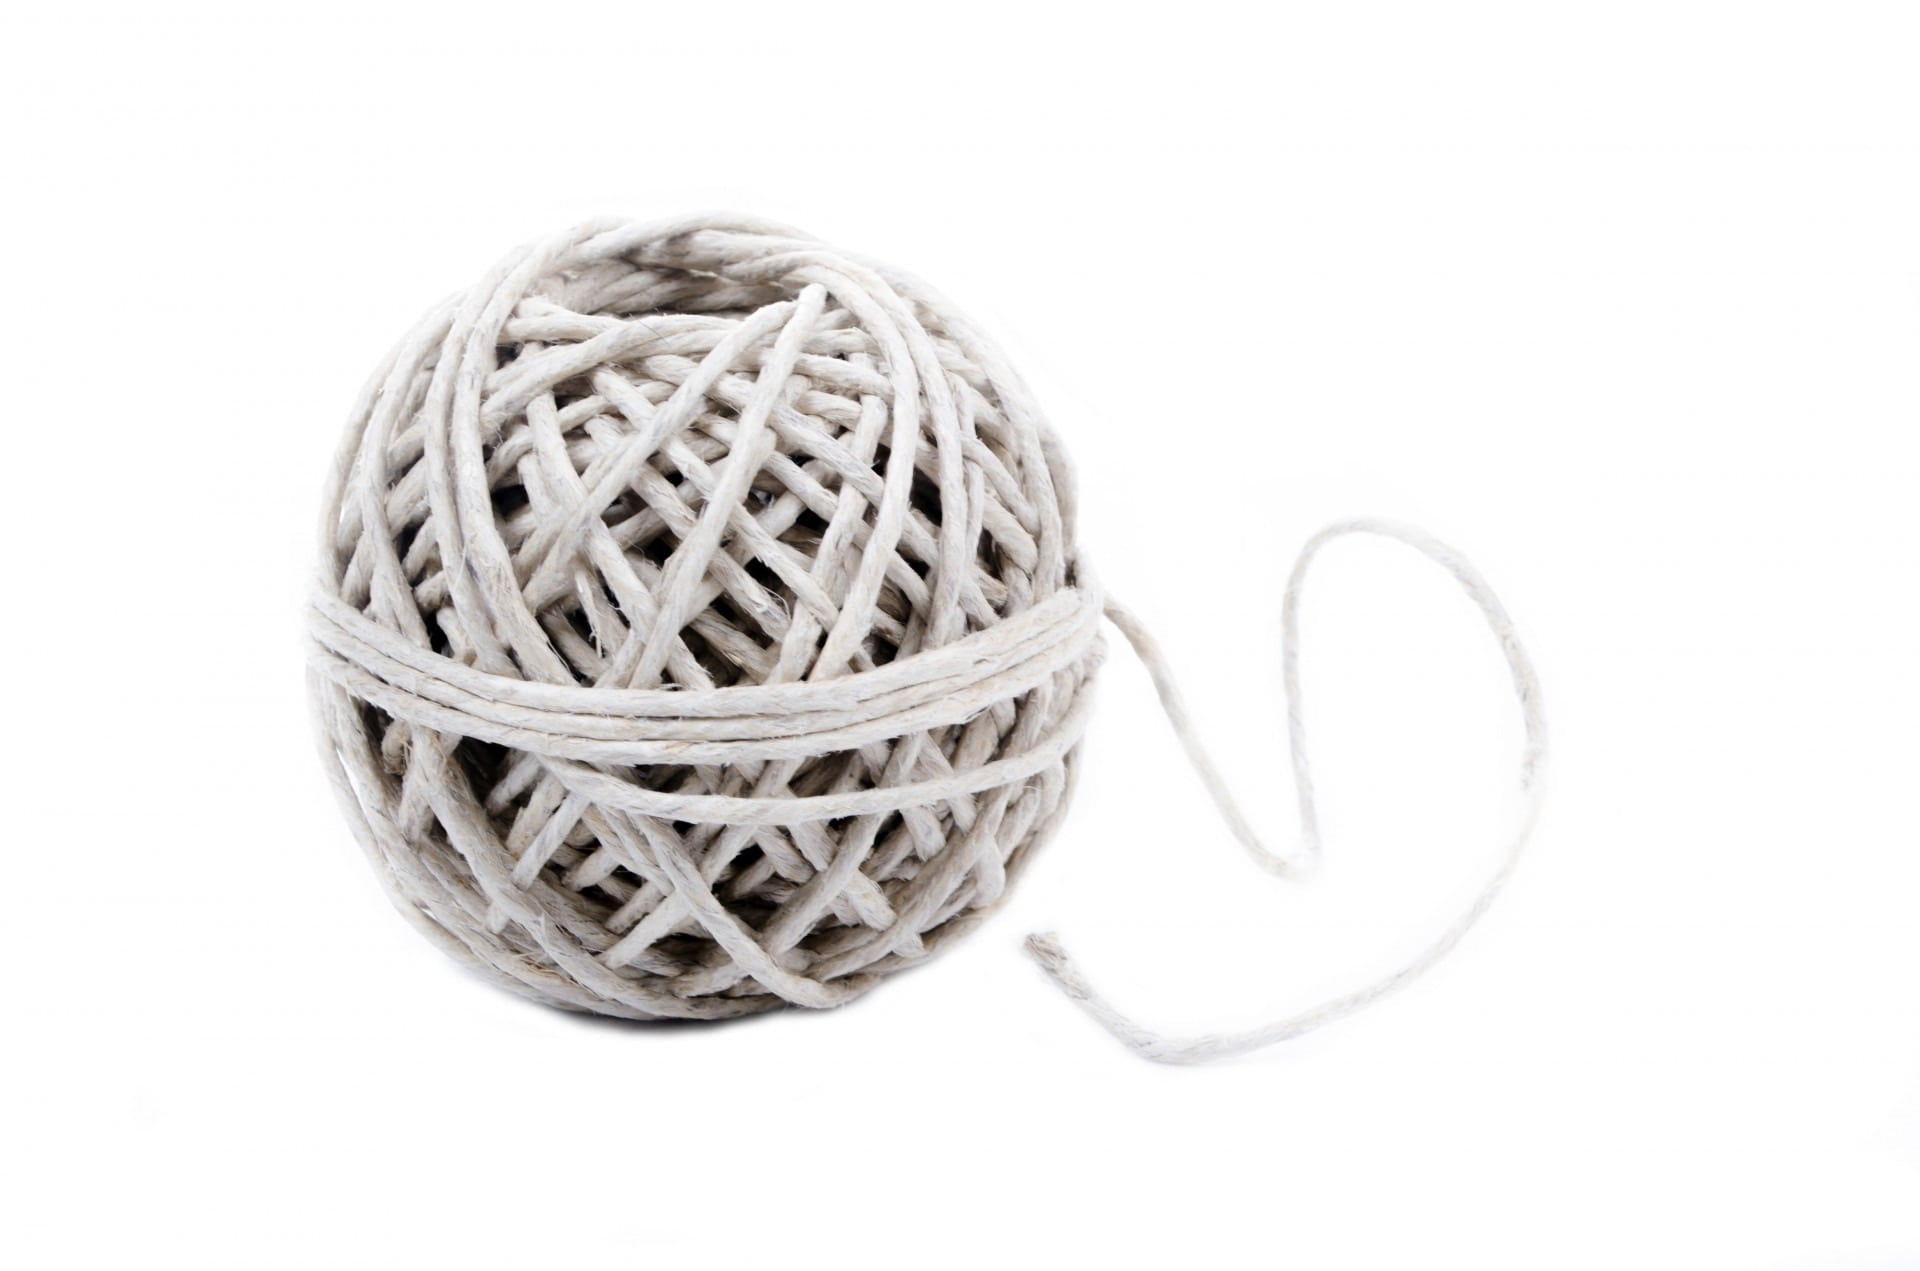 Royalty-Free photo: Round gray rolled yarn